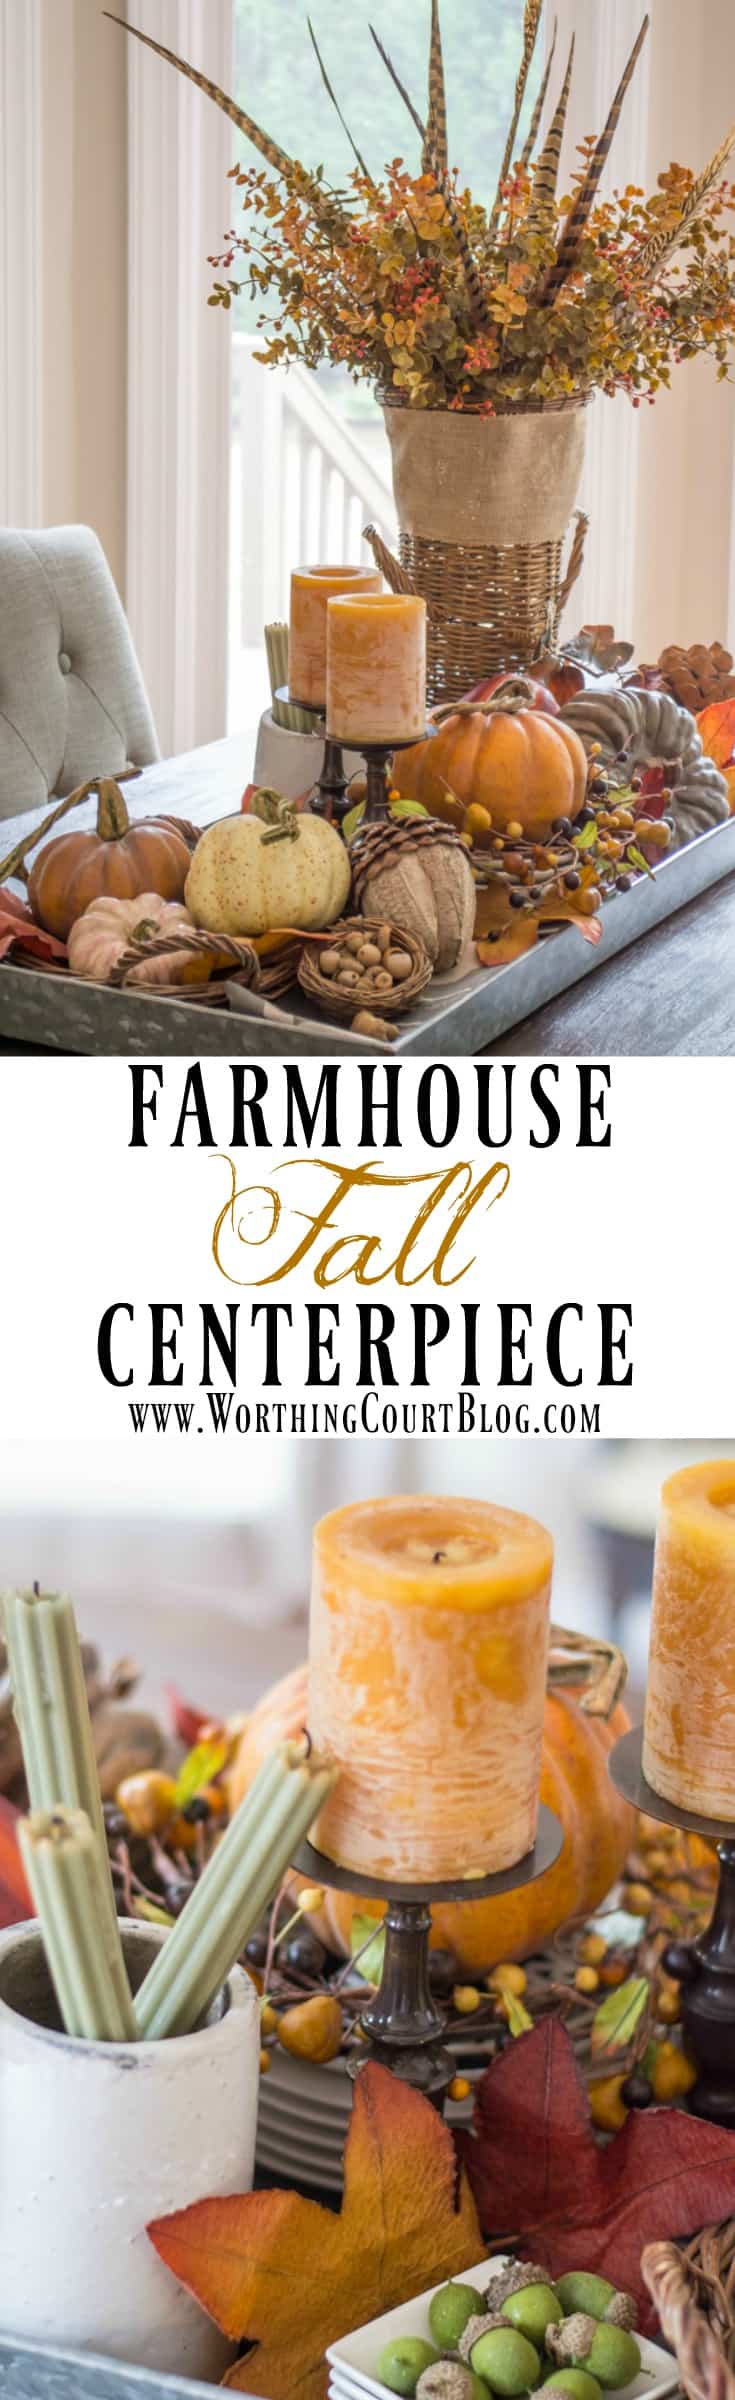 Farmhouse fall centerpiece graphic.